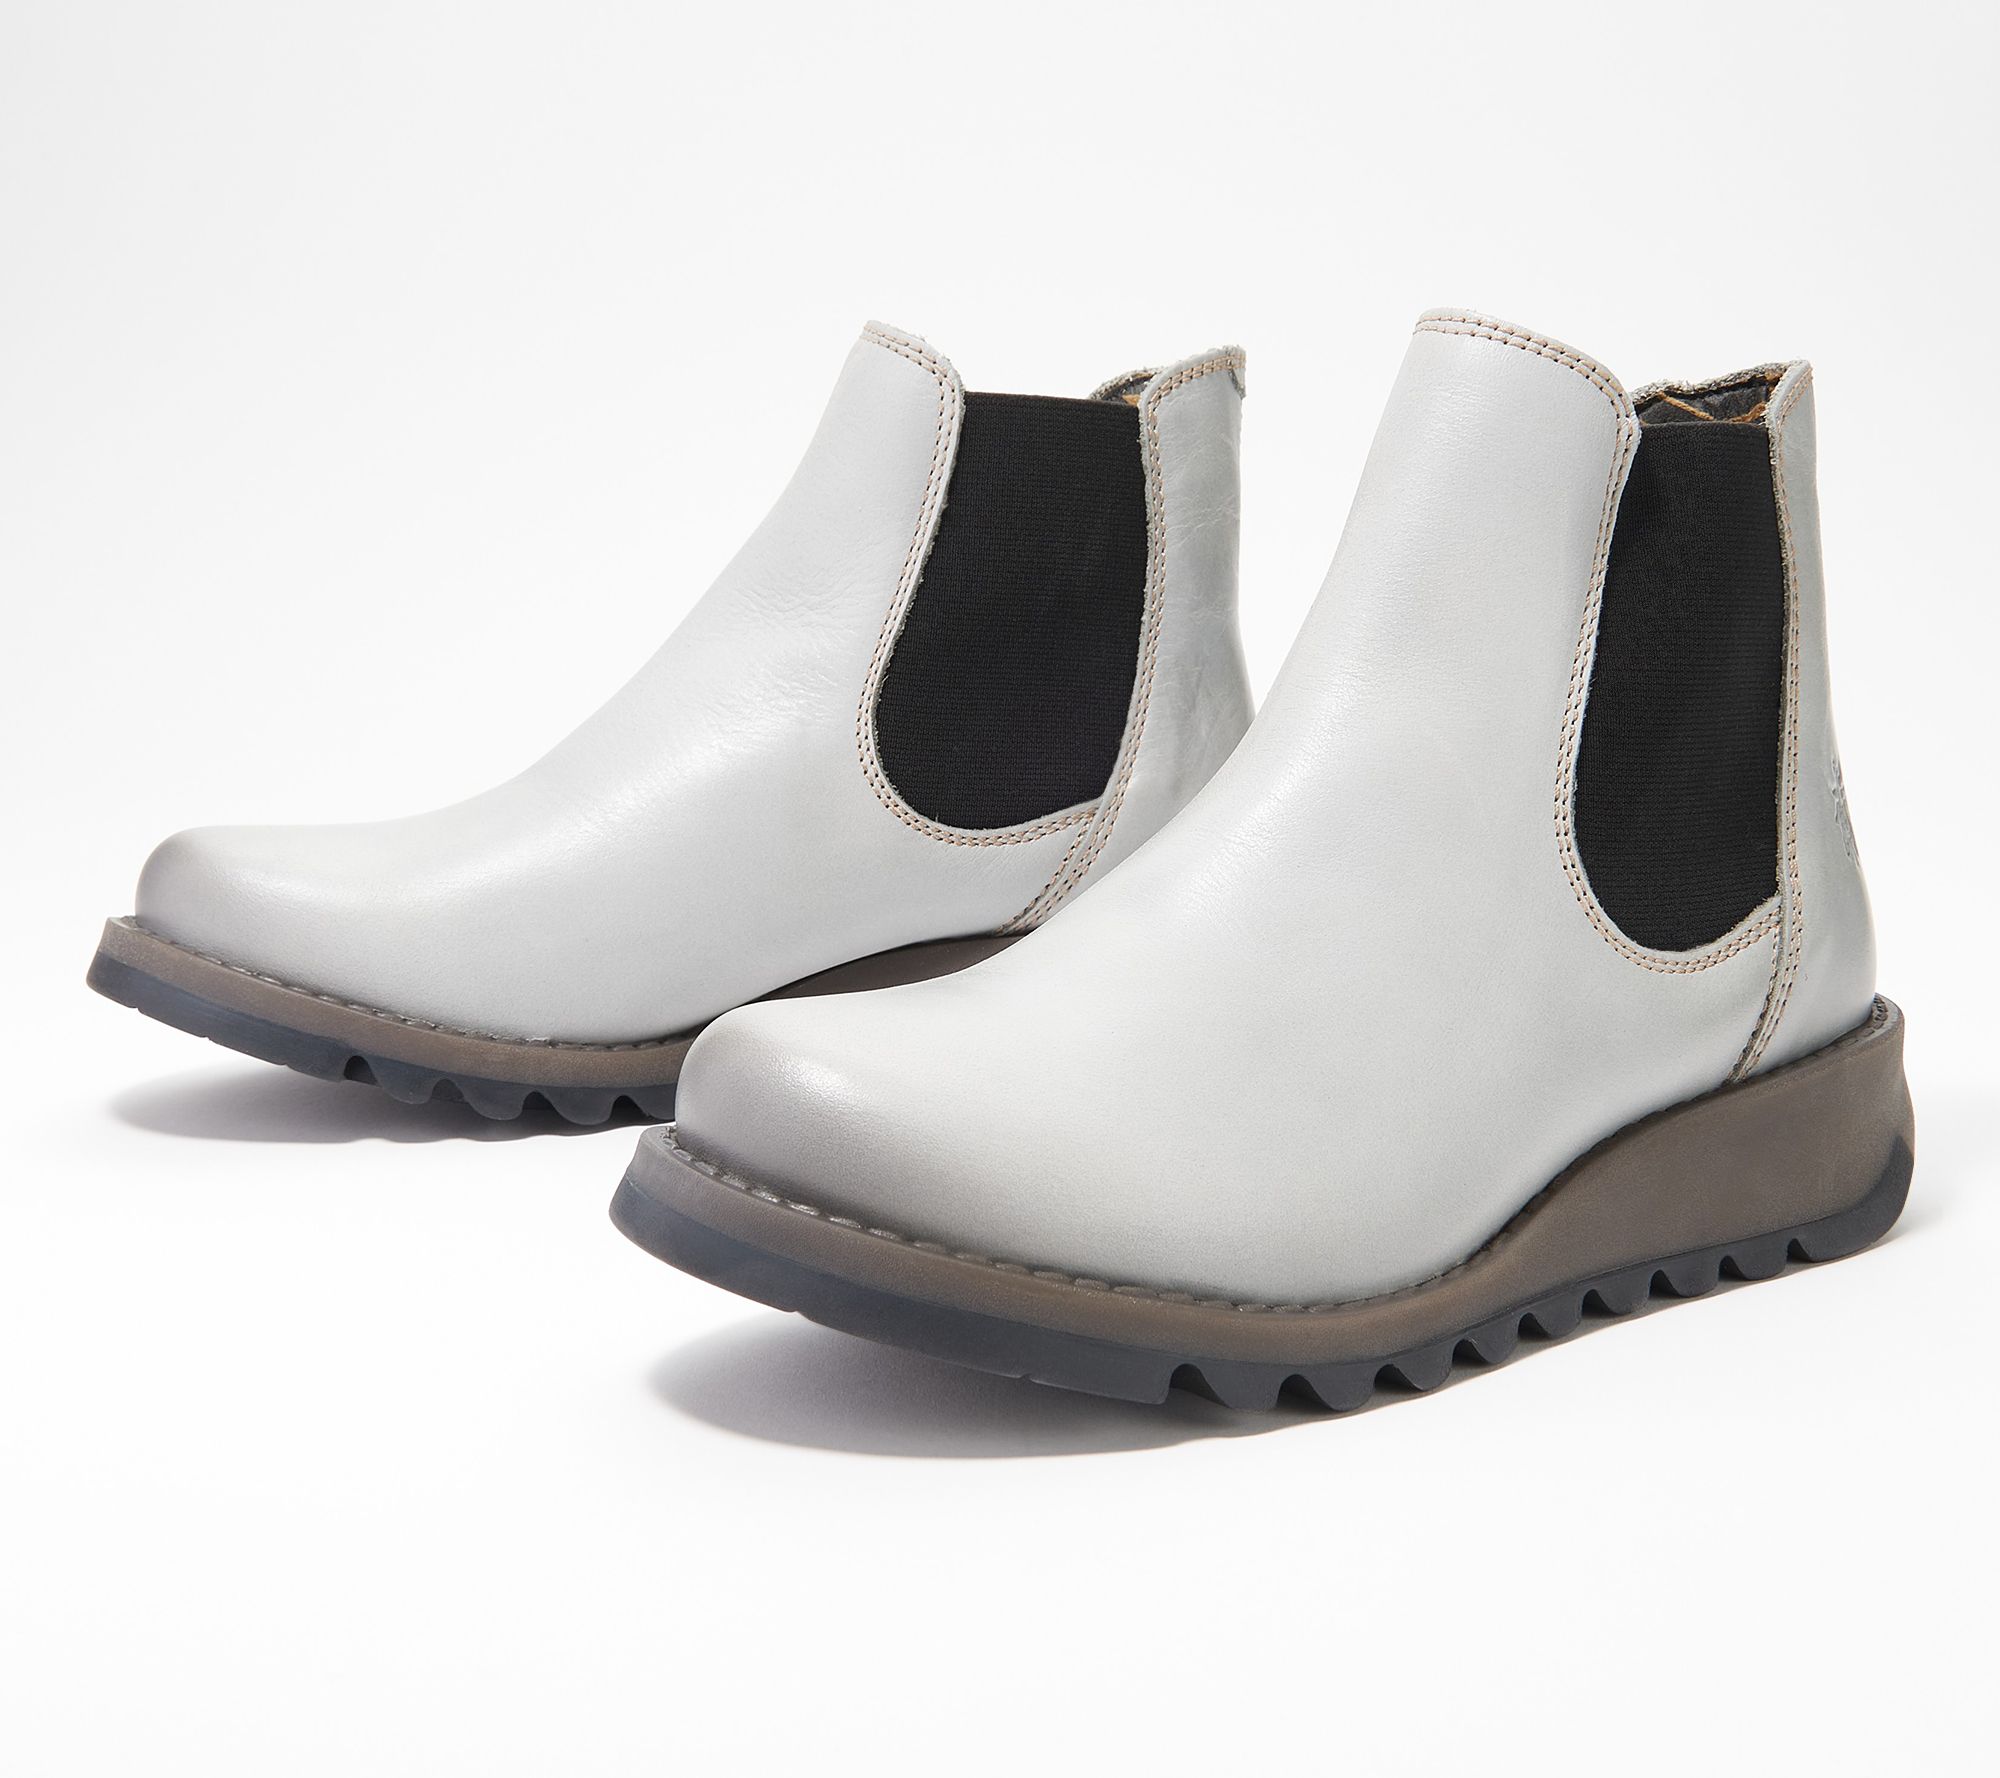 London Leather Chelsea Boots - Salv - QVC.com